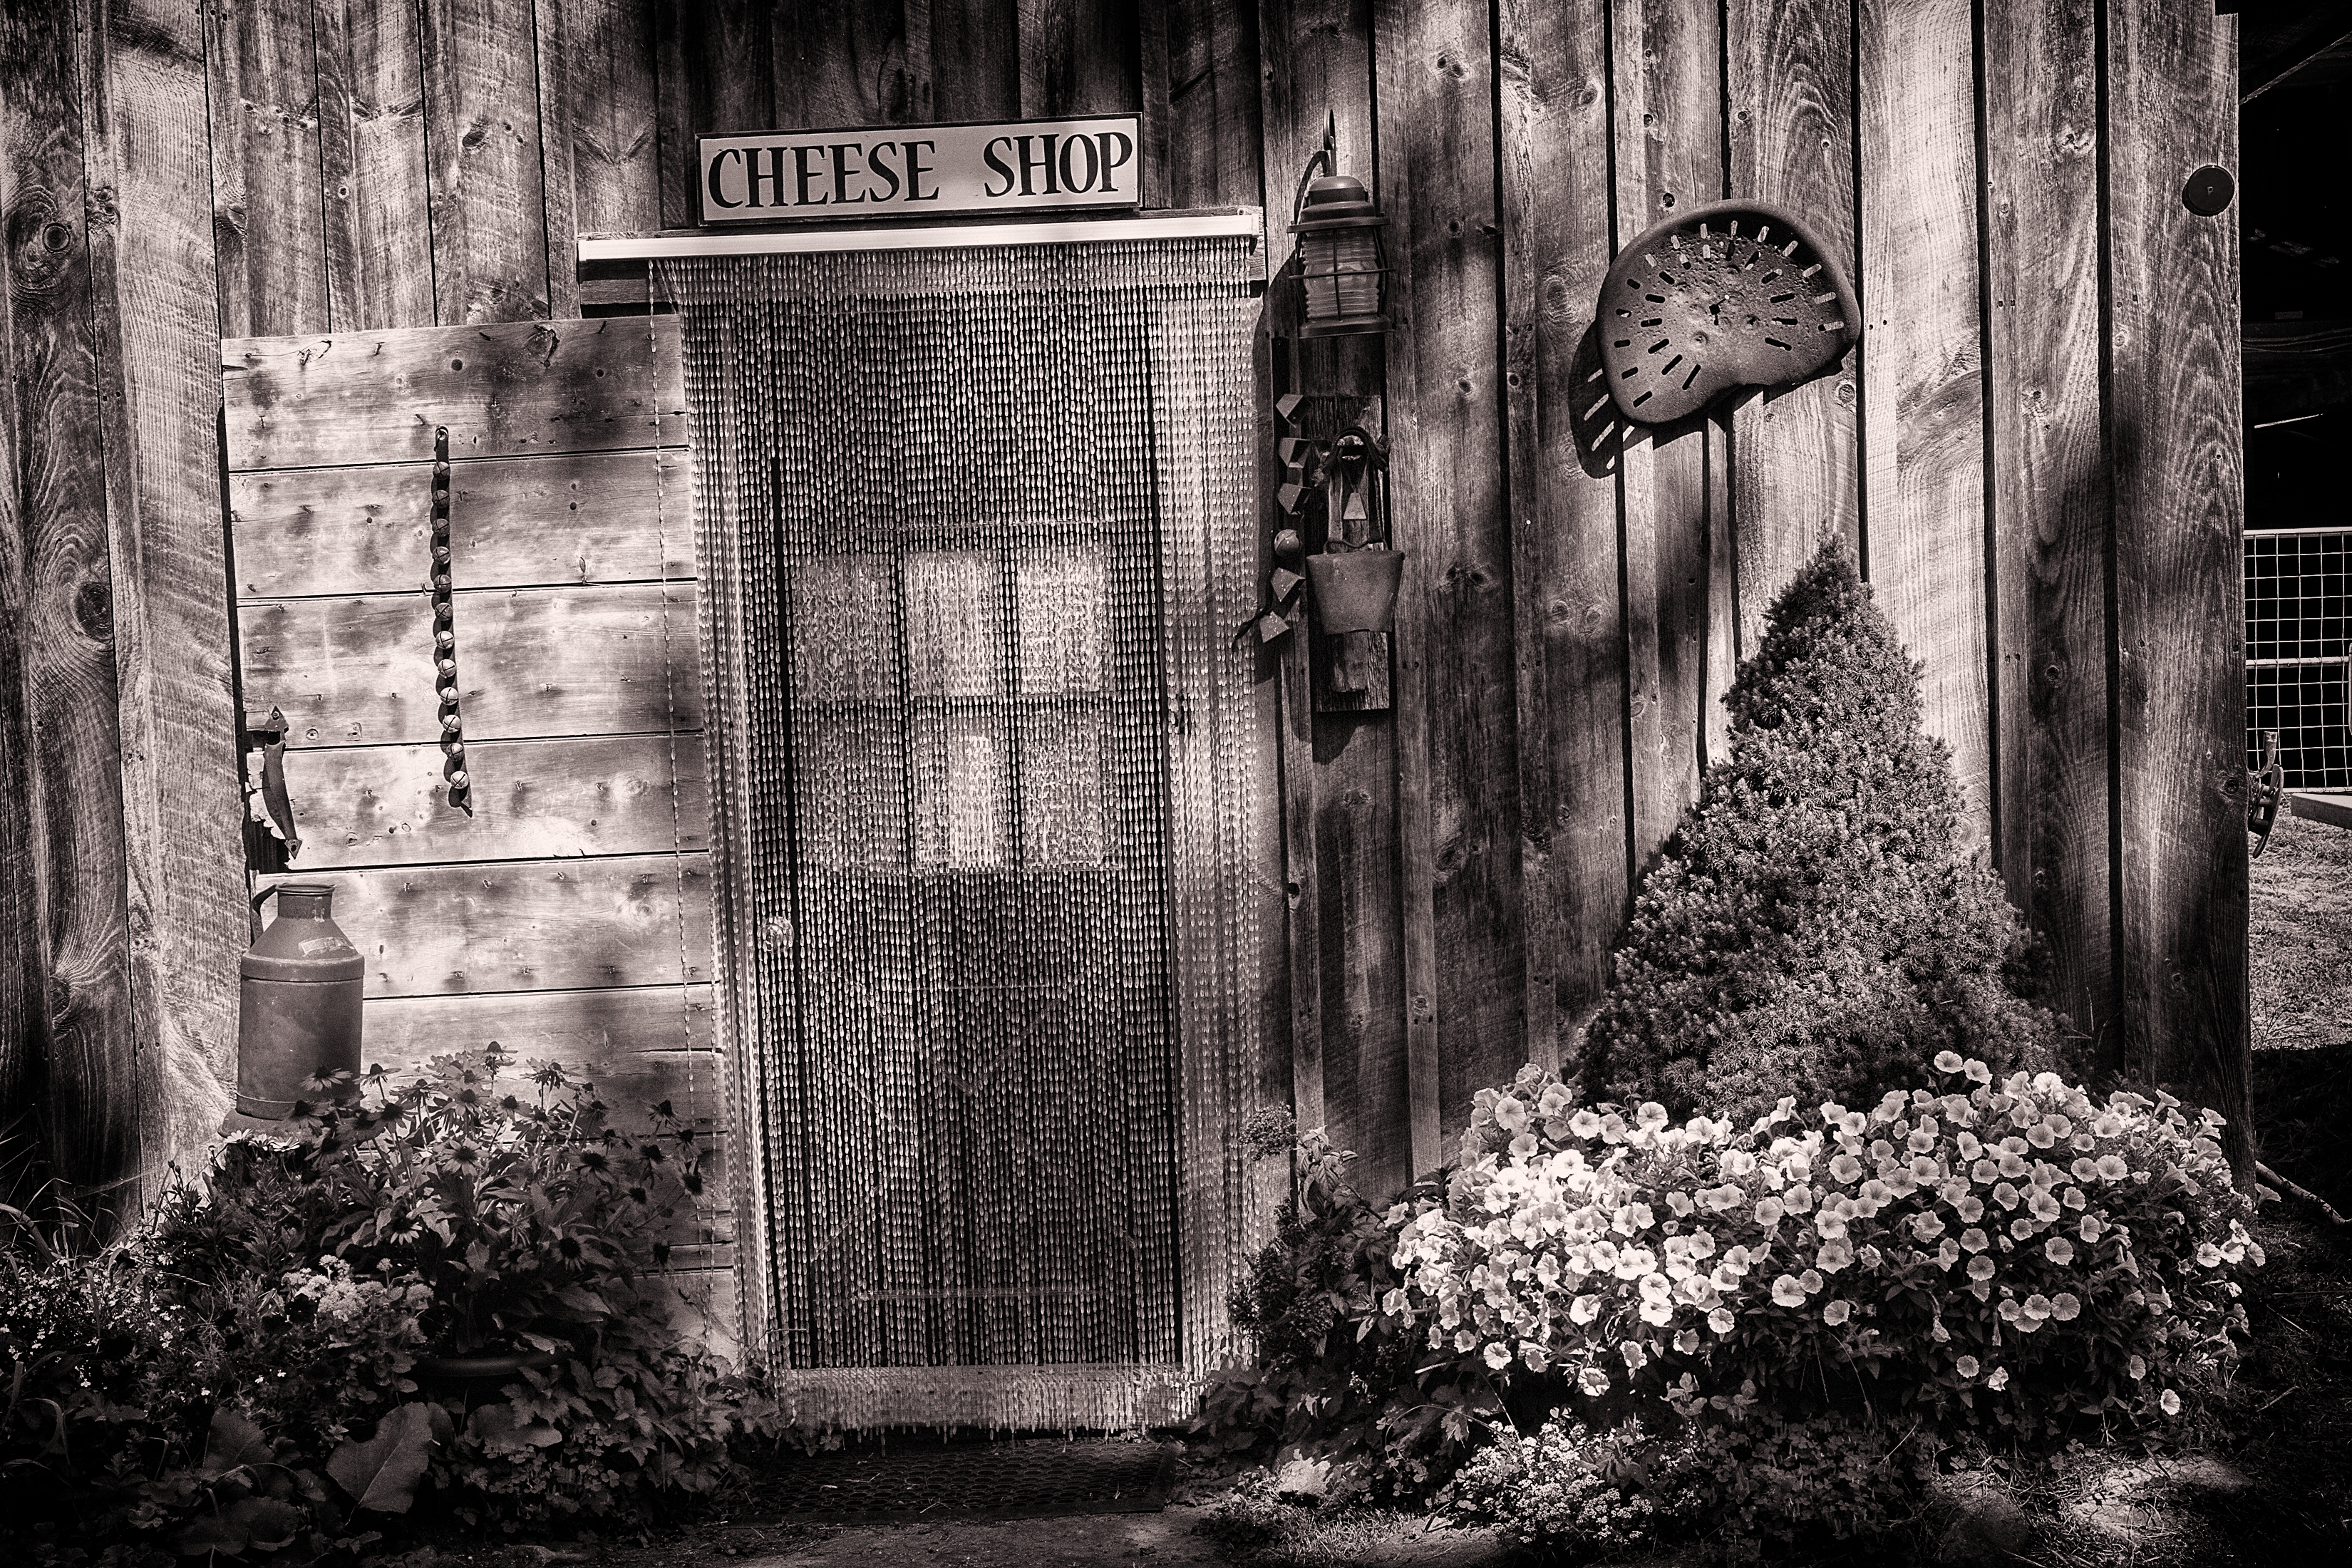 Cheese Shop, Cato Corners